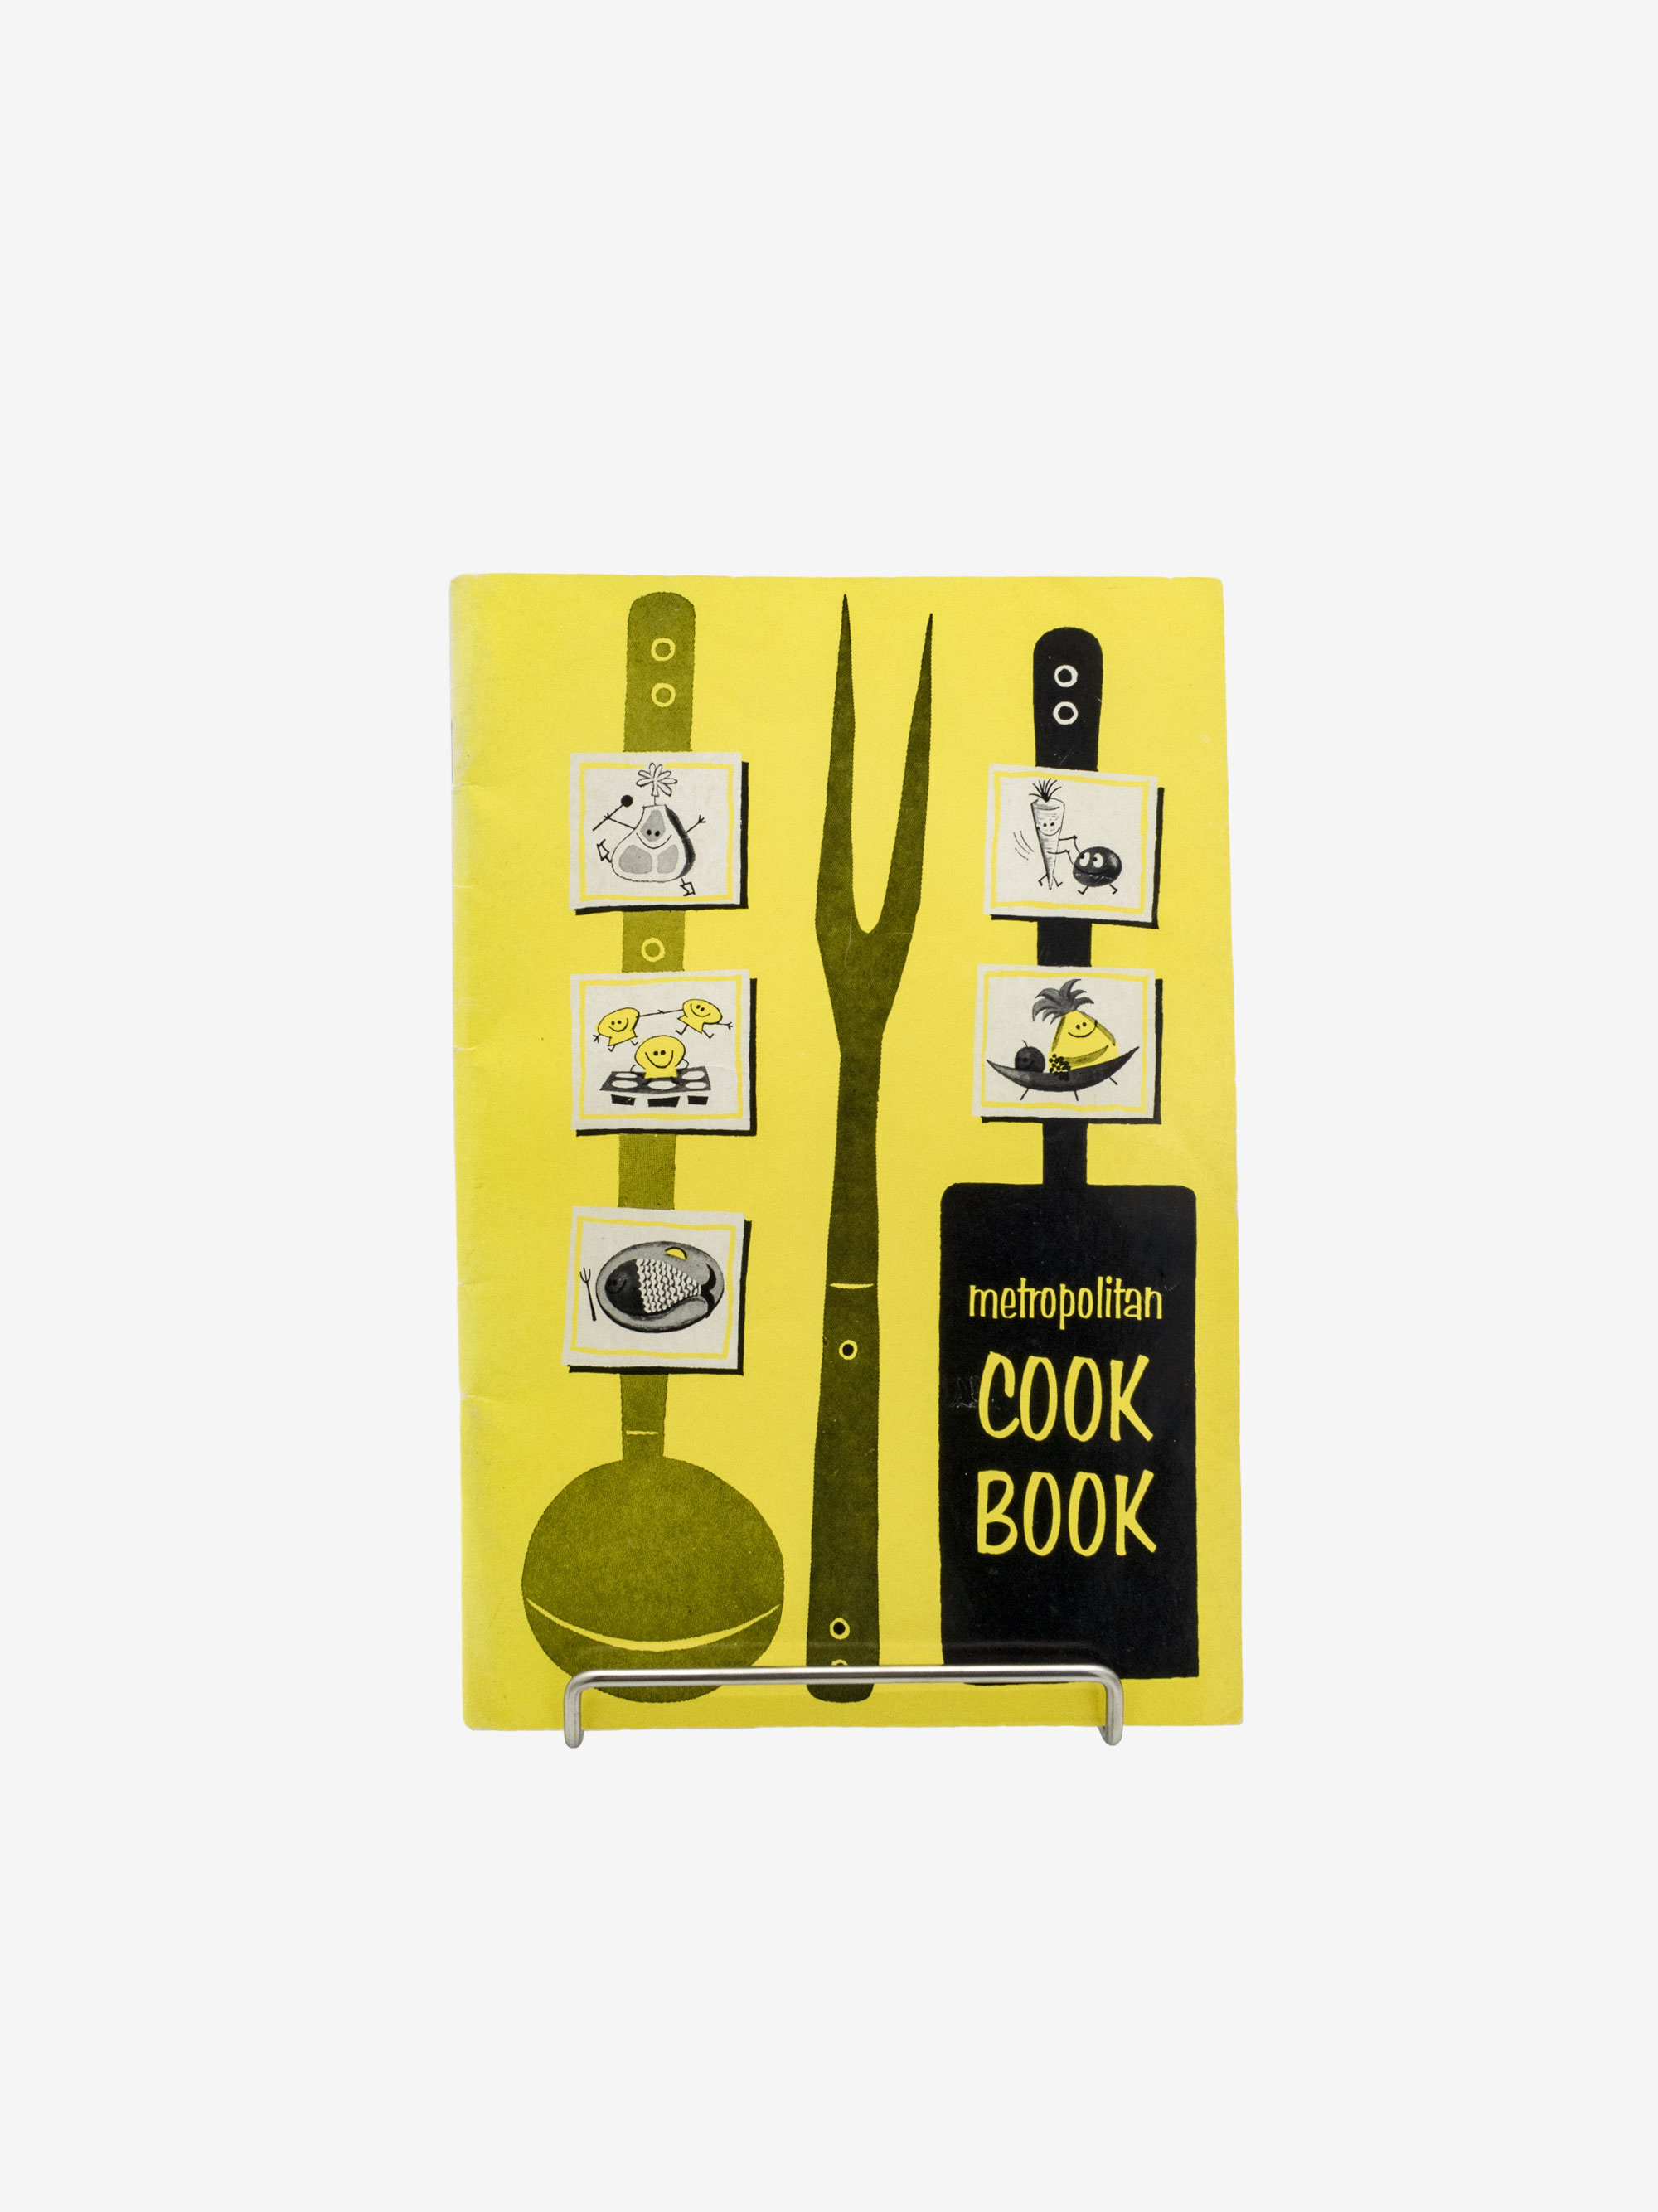 COOKBOOK 1970 Metropolitan Cookbook